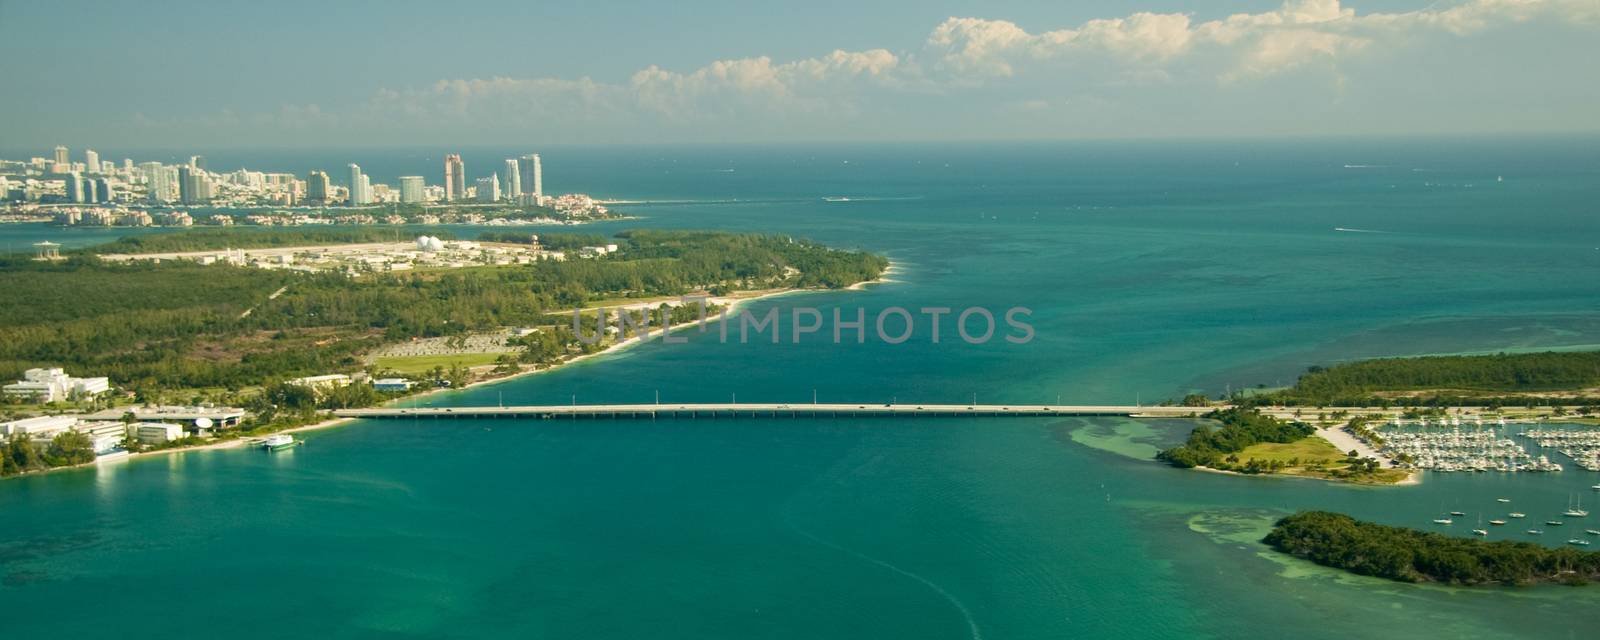 Bridge over the ocean by CelsoDiniz